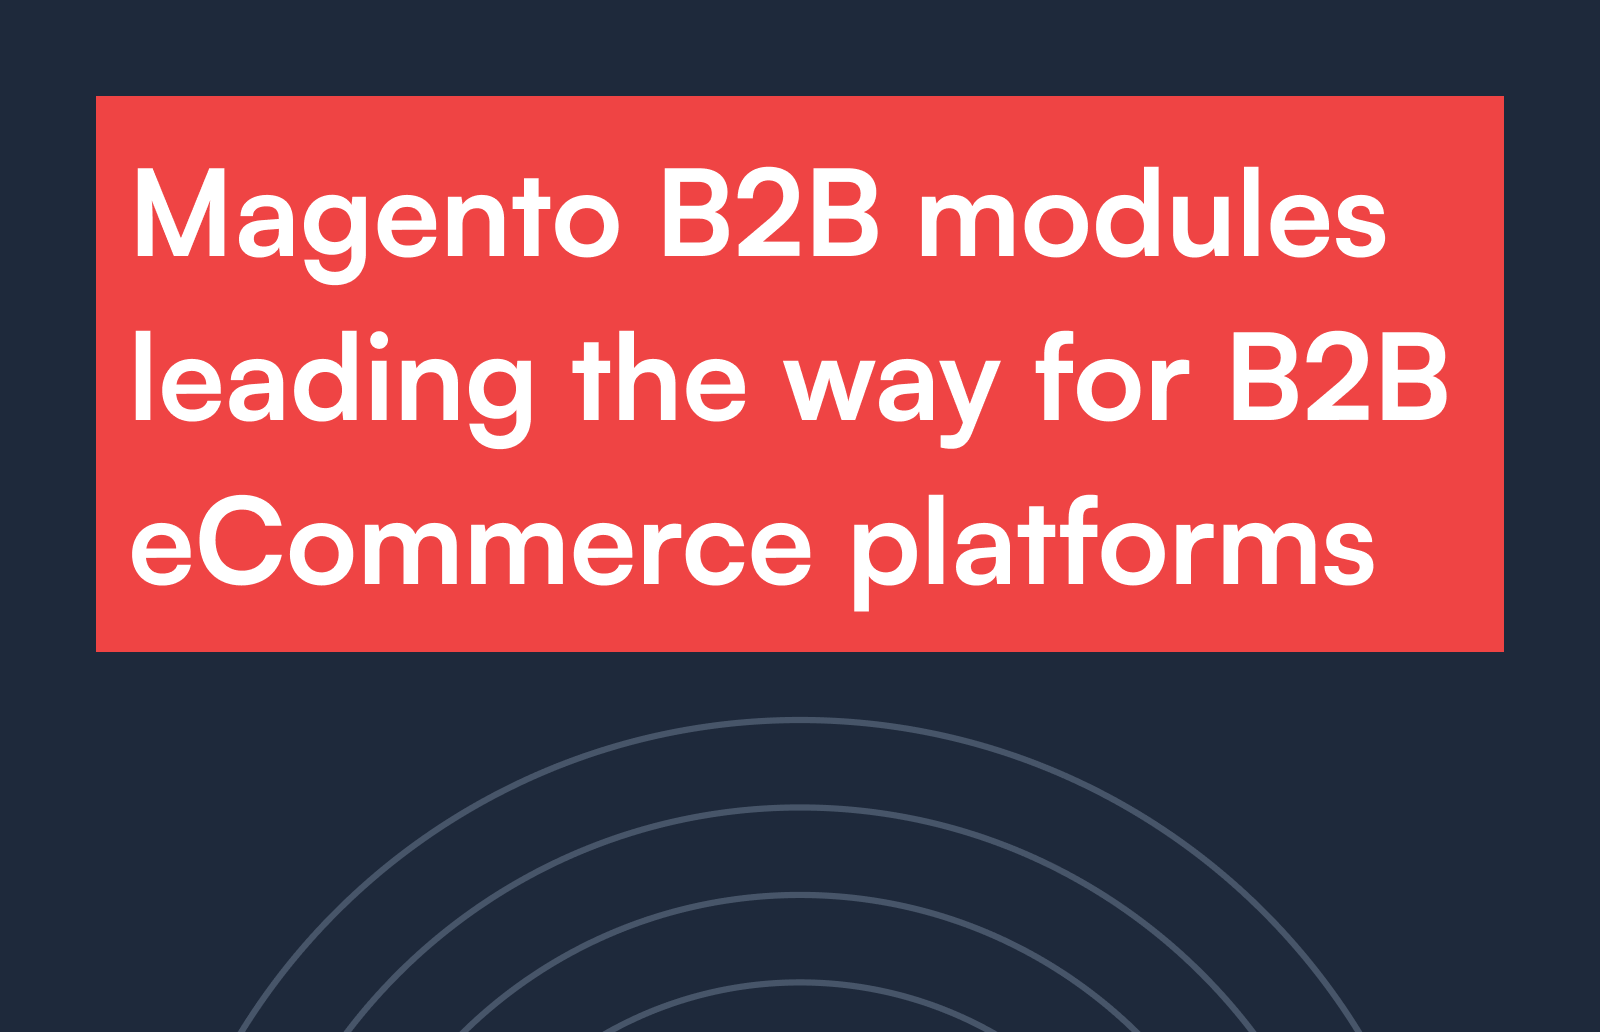 Magento B2B modules leading the way for B2B ecommerce platforms